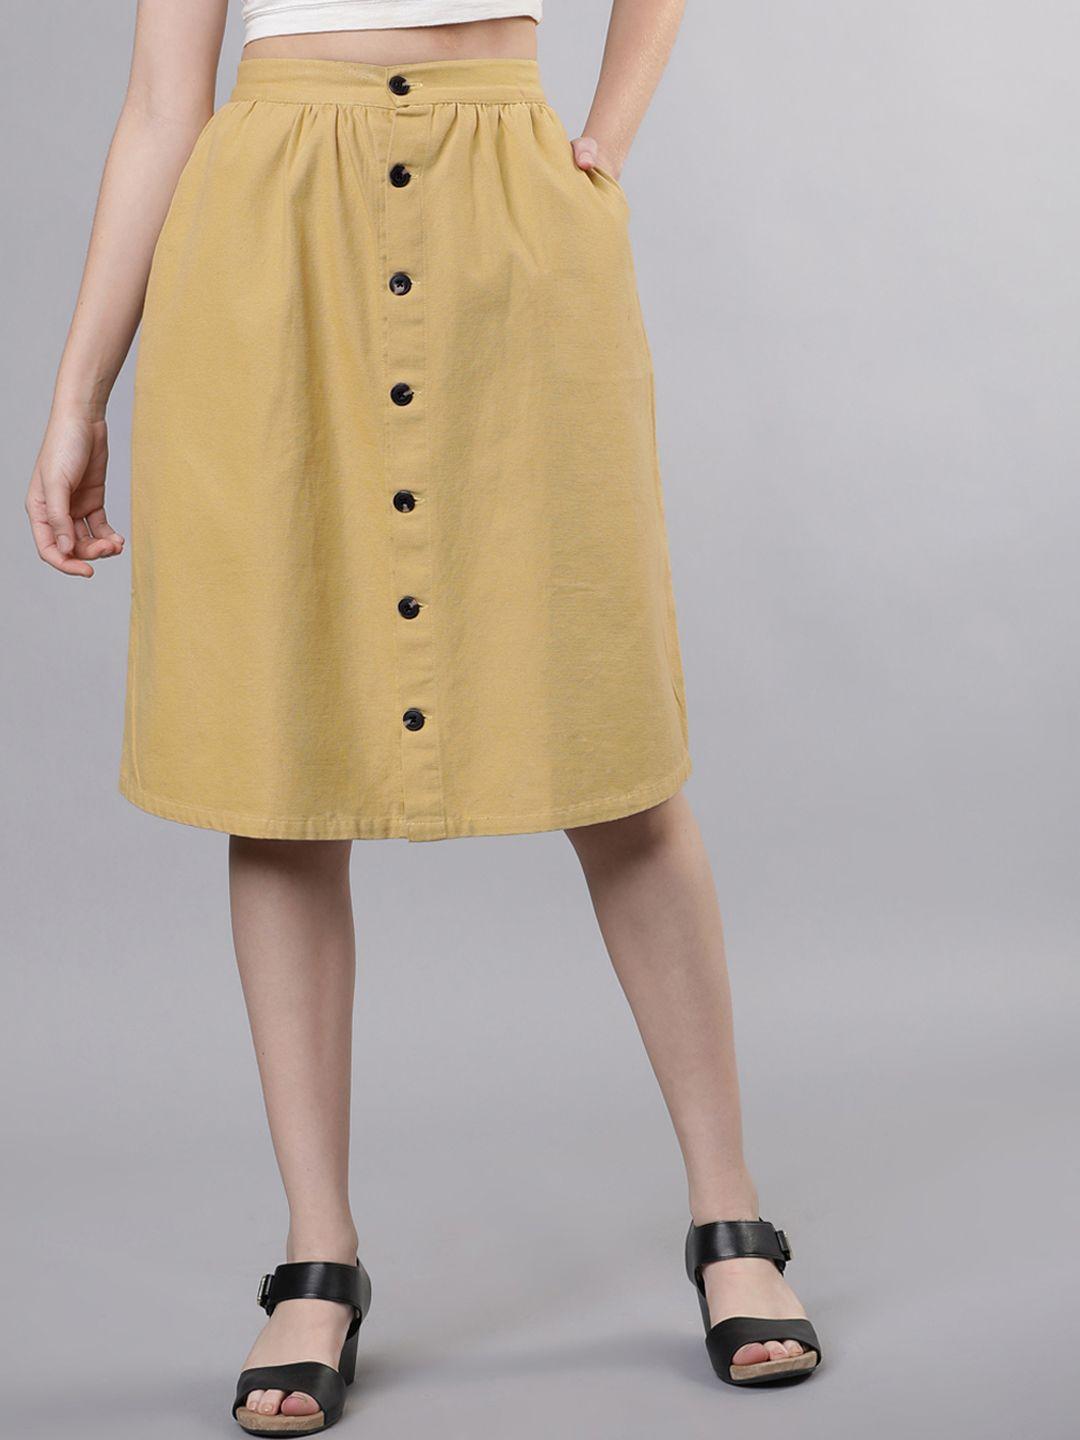 tokyo-talkies-women-mustard-yellow-solid-a-line-knee-length-skirt